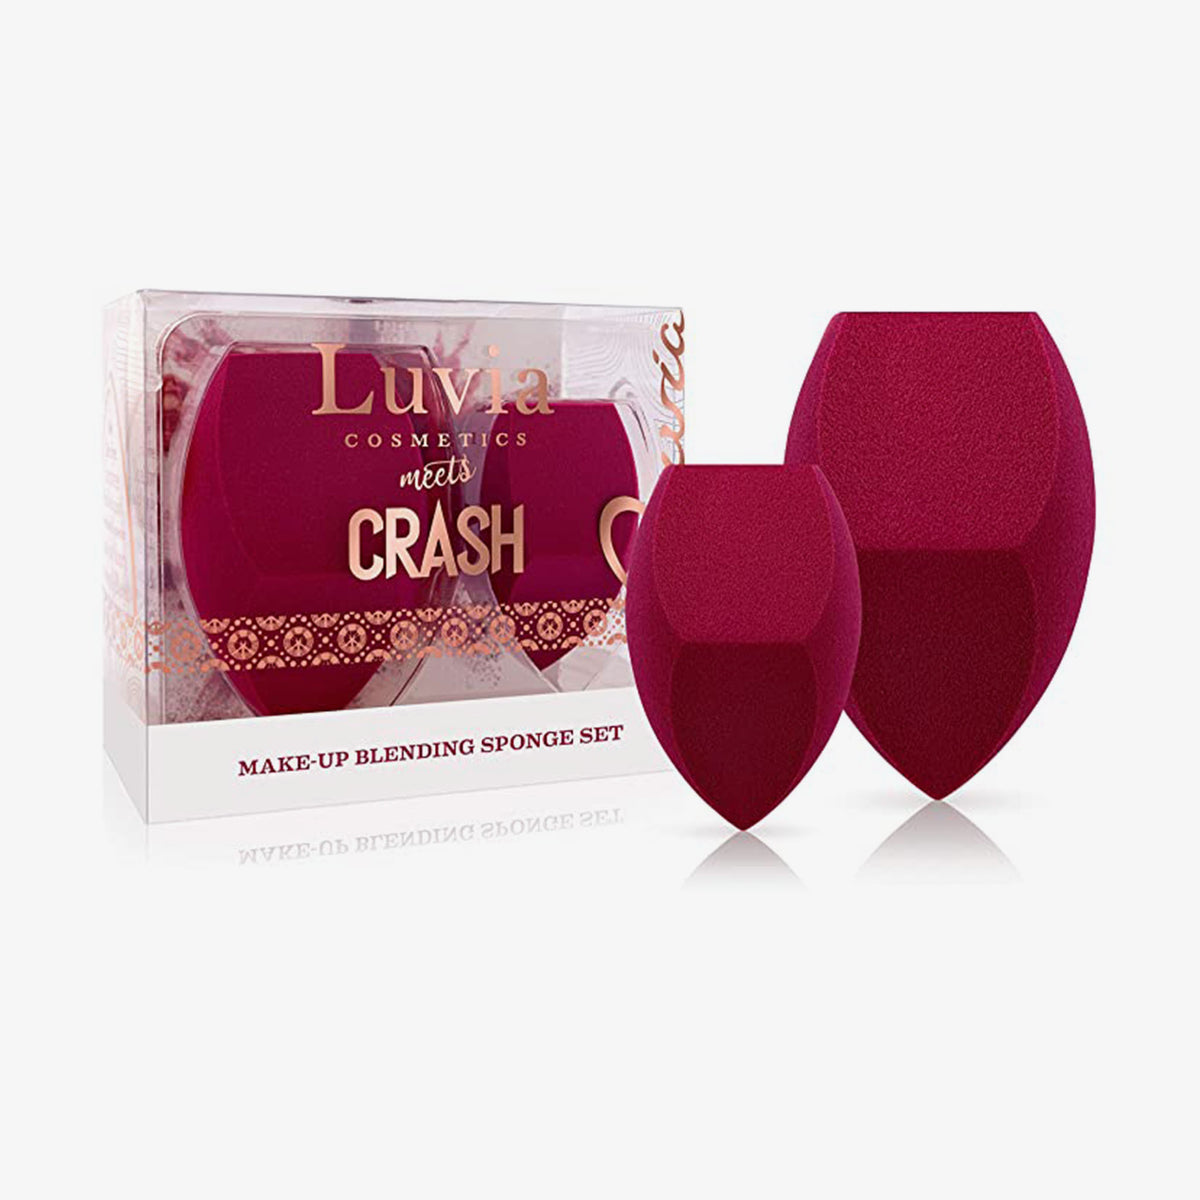 CRASH Cosmetics | Luvia x Crash Cosmetics Make-Up Blending Sponge Set